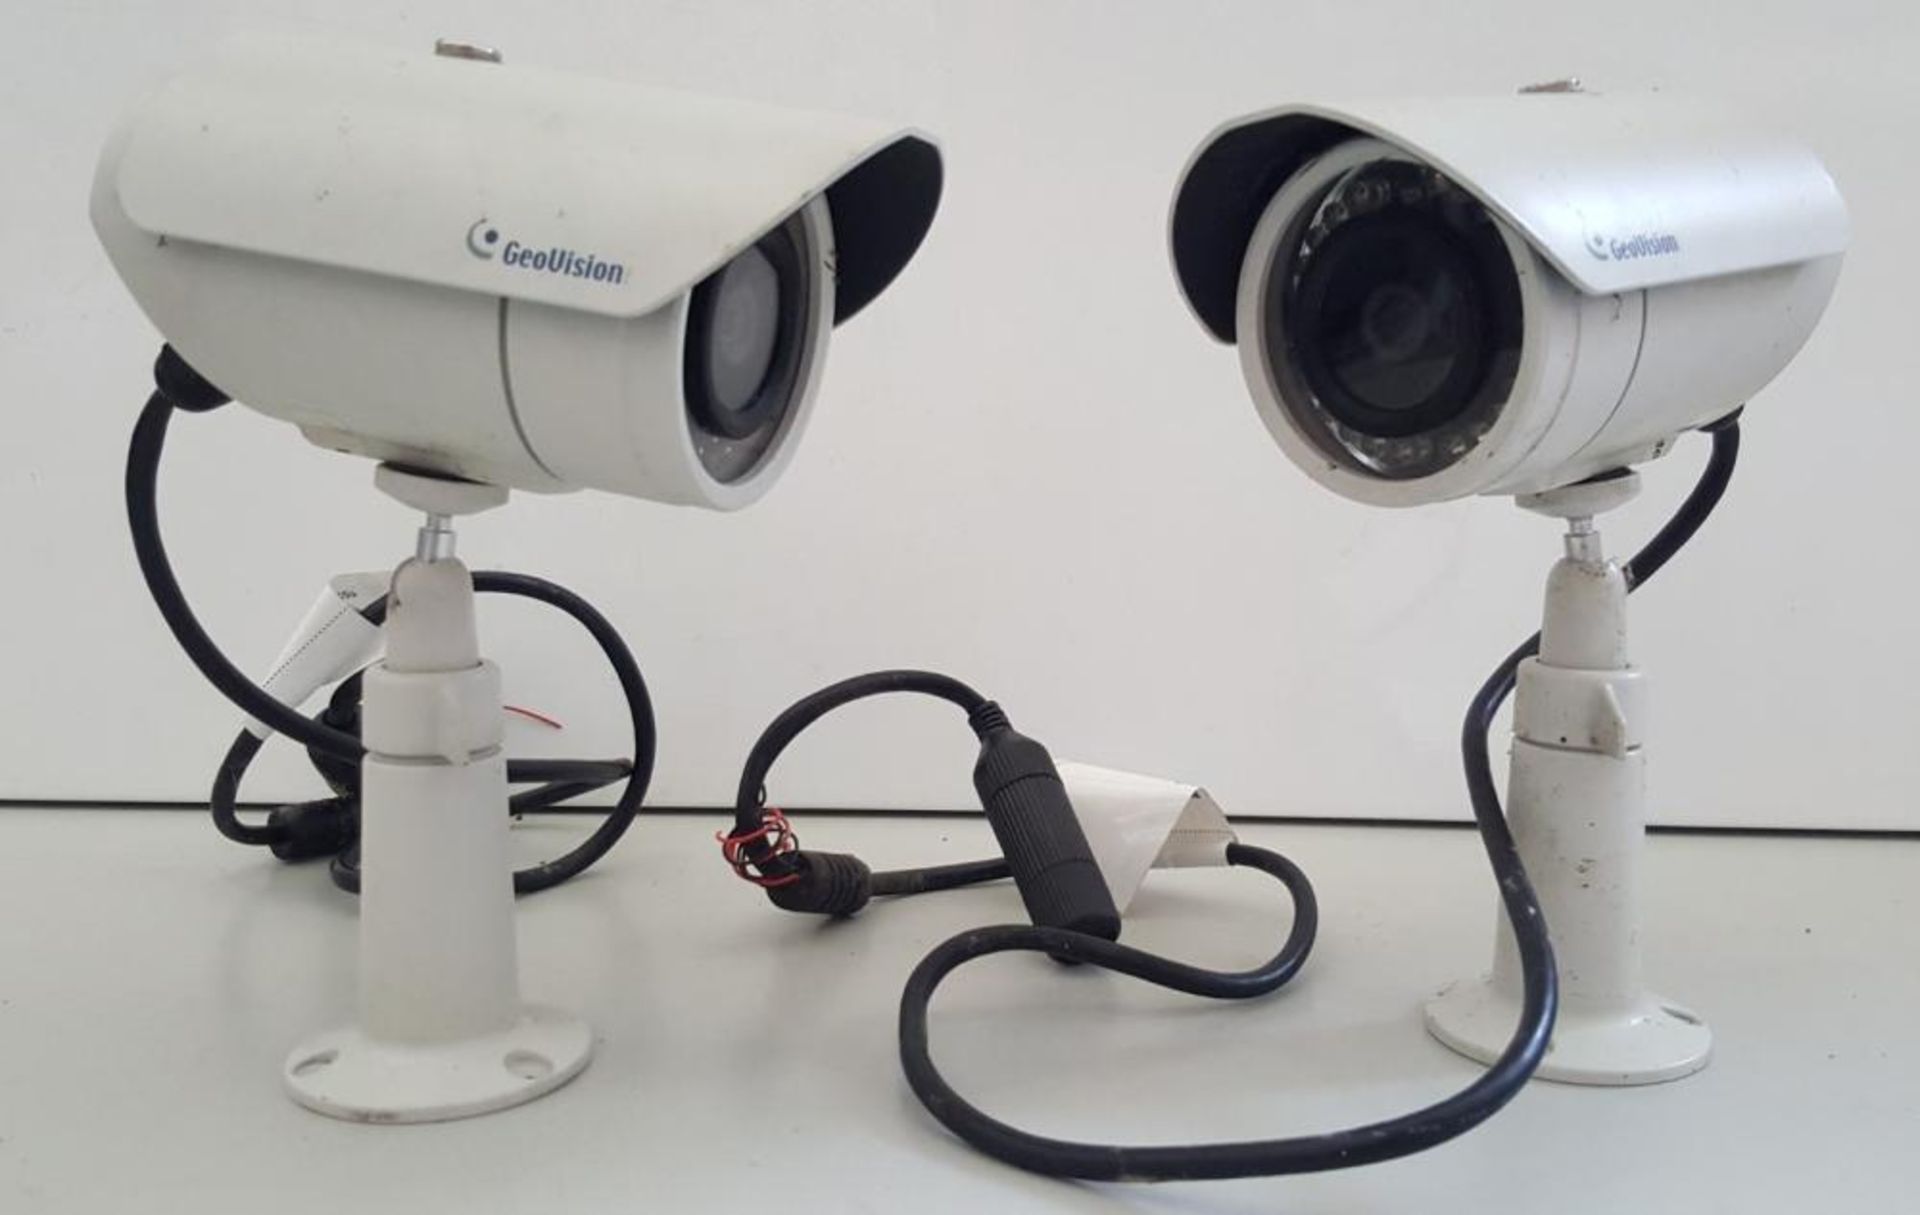 4 x Geovision Security Cameras (2 x GV-EFD1100, 2 x GV-EBL1100) - Ref CQ230/K2 - CL379 - Location: A - Image 4 of 10